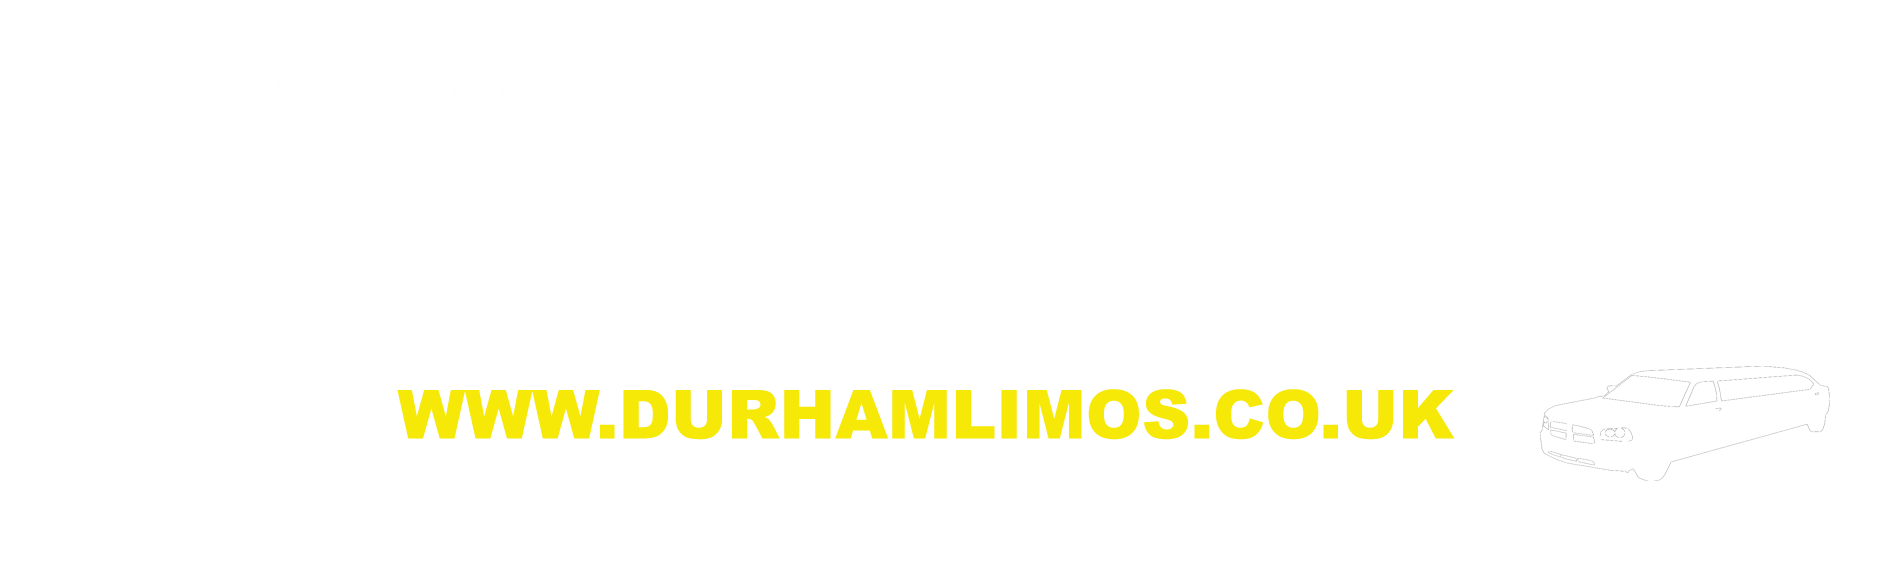  Durham Limos 01914477728